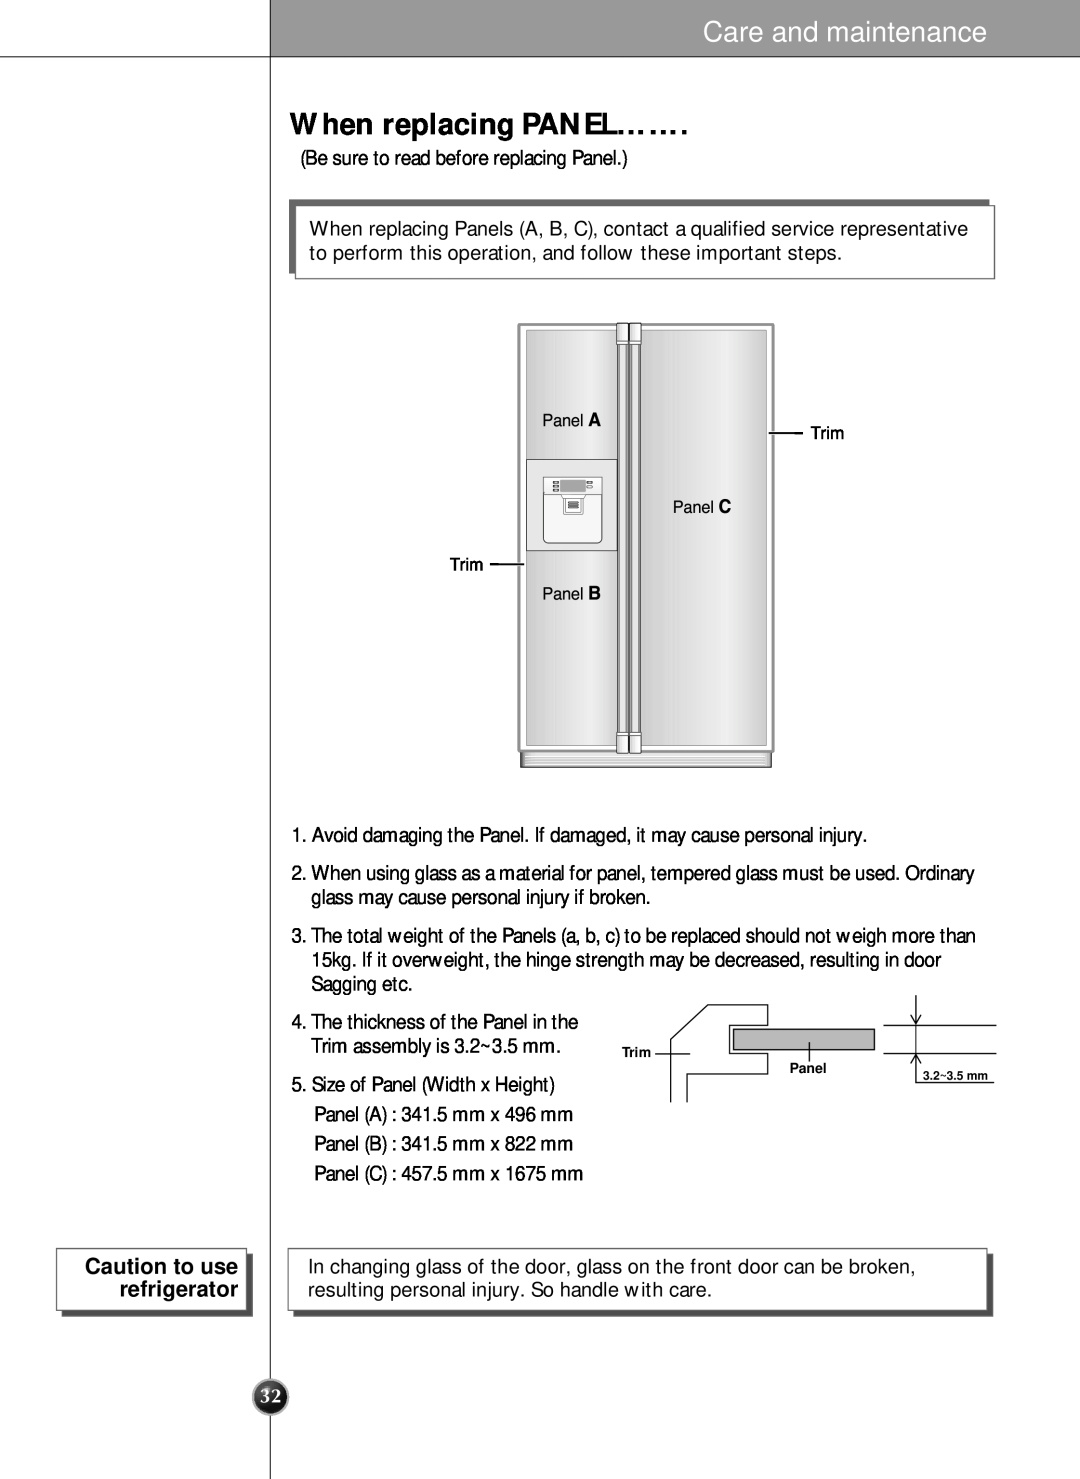 LG Electronics LRSC21951ST manual When replacing PANEL……, TrimPanelPanelBTrim, Care and maintenance 